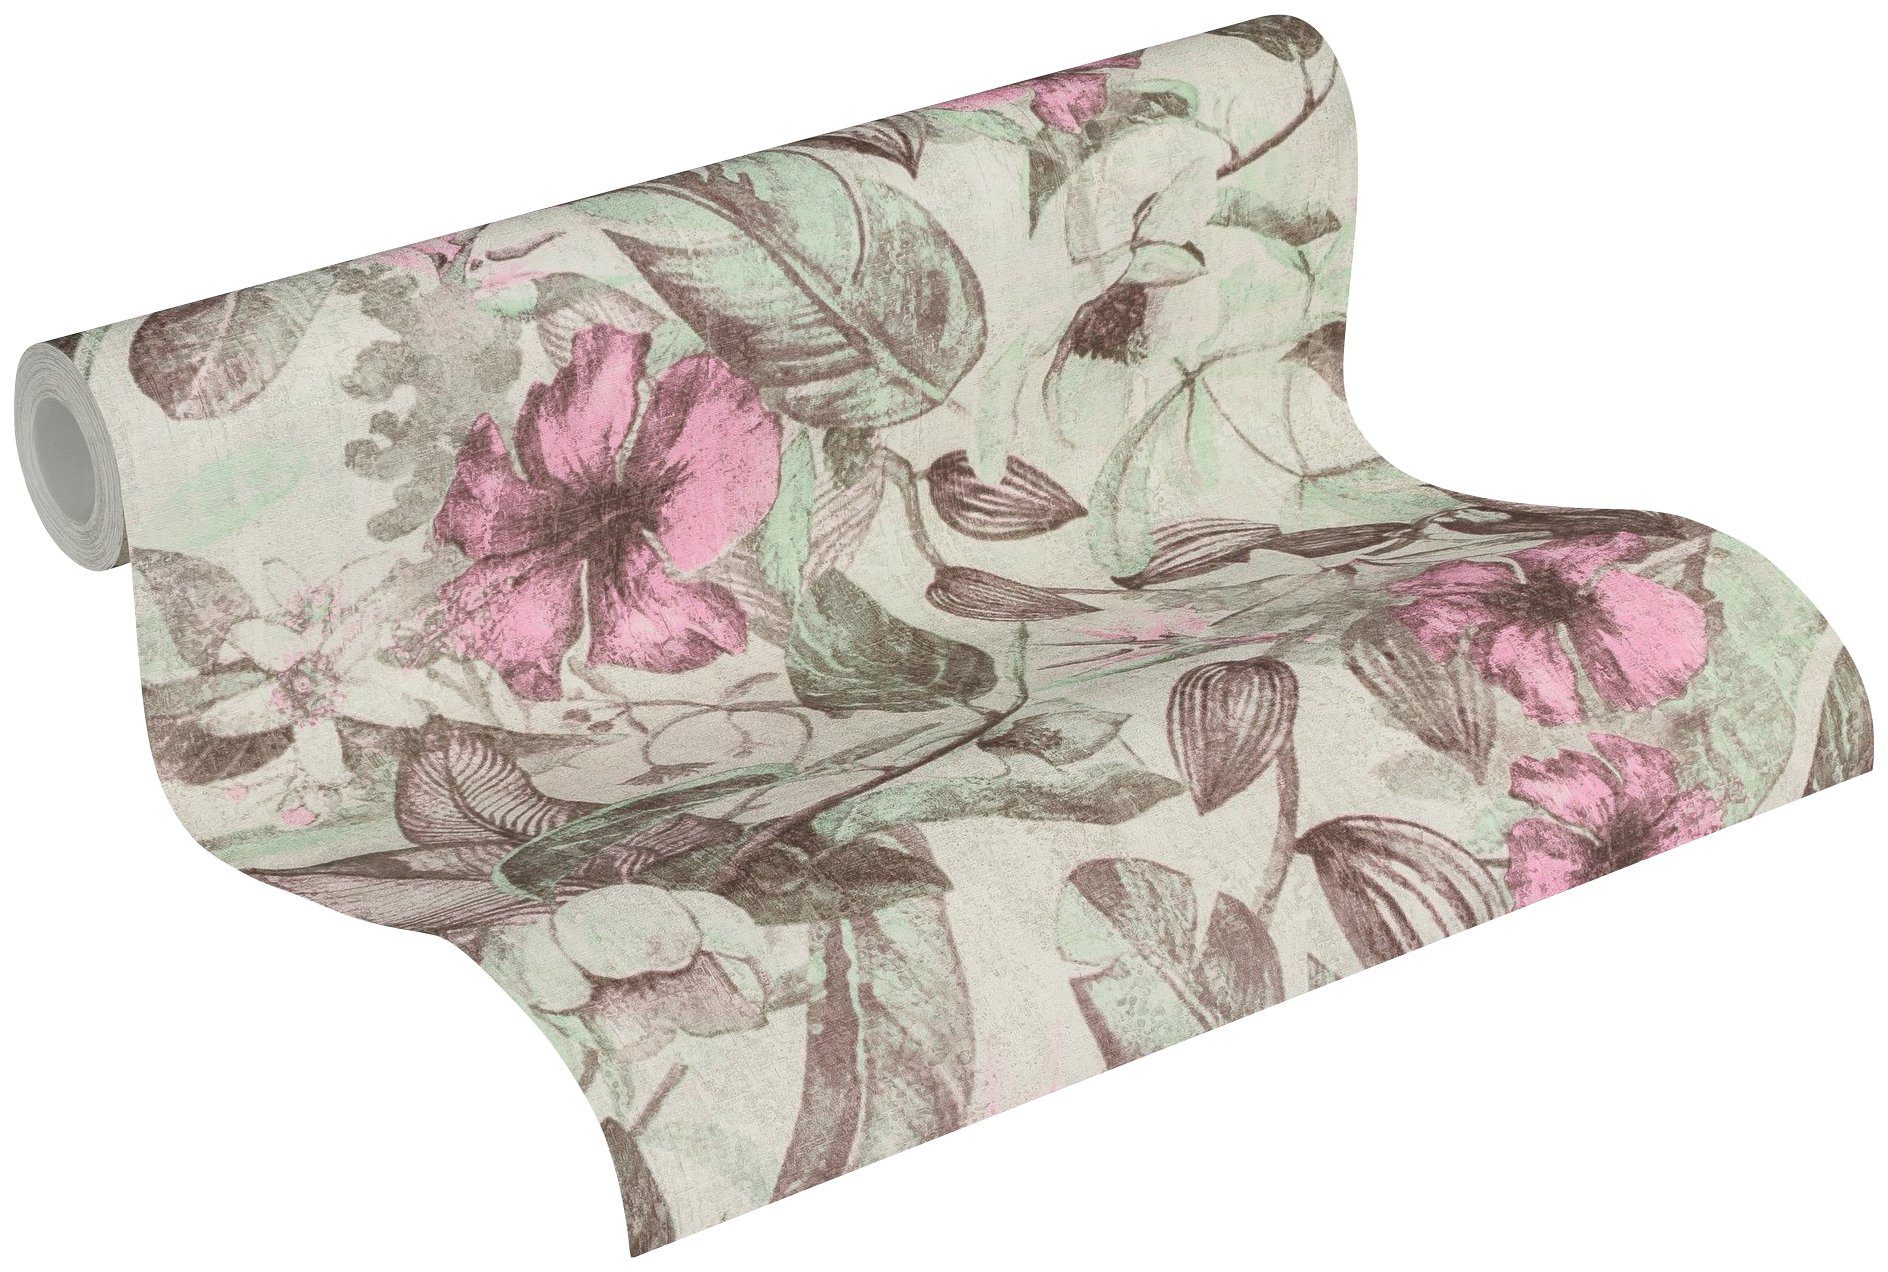 A.S. Blumen Vliestapete bunt/rosa floral, Blätter Tapete Création Greenery Motiv, mit